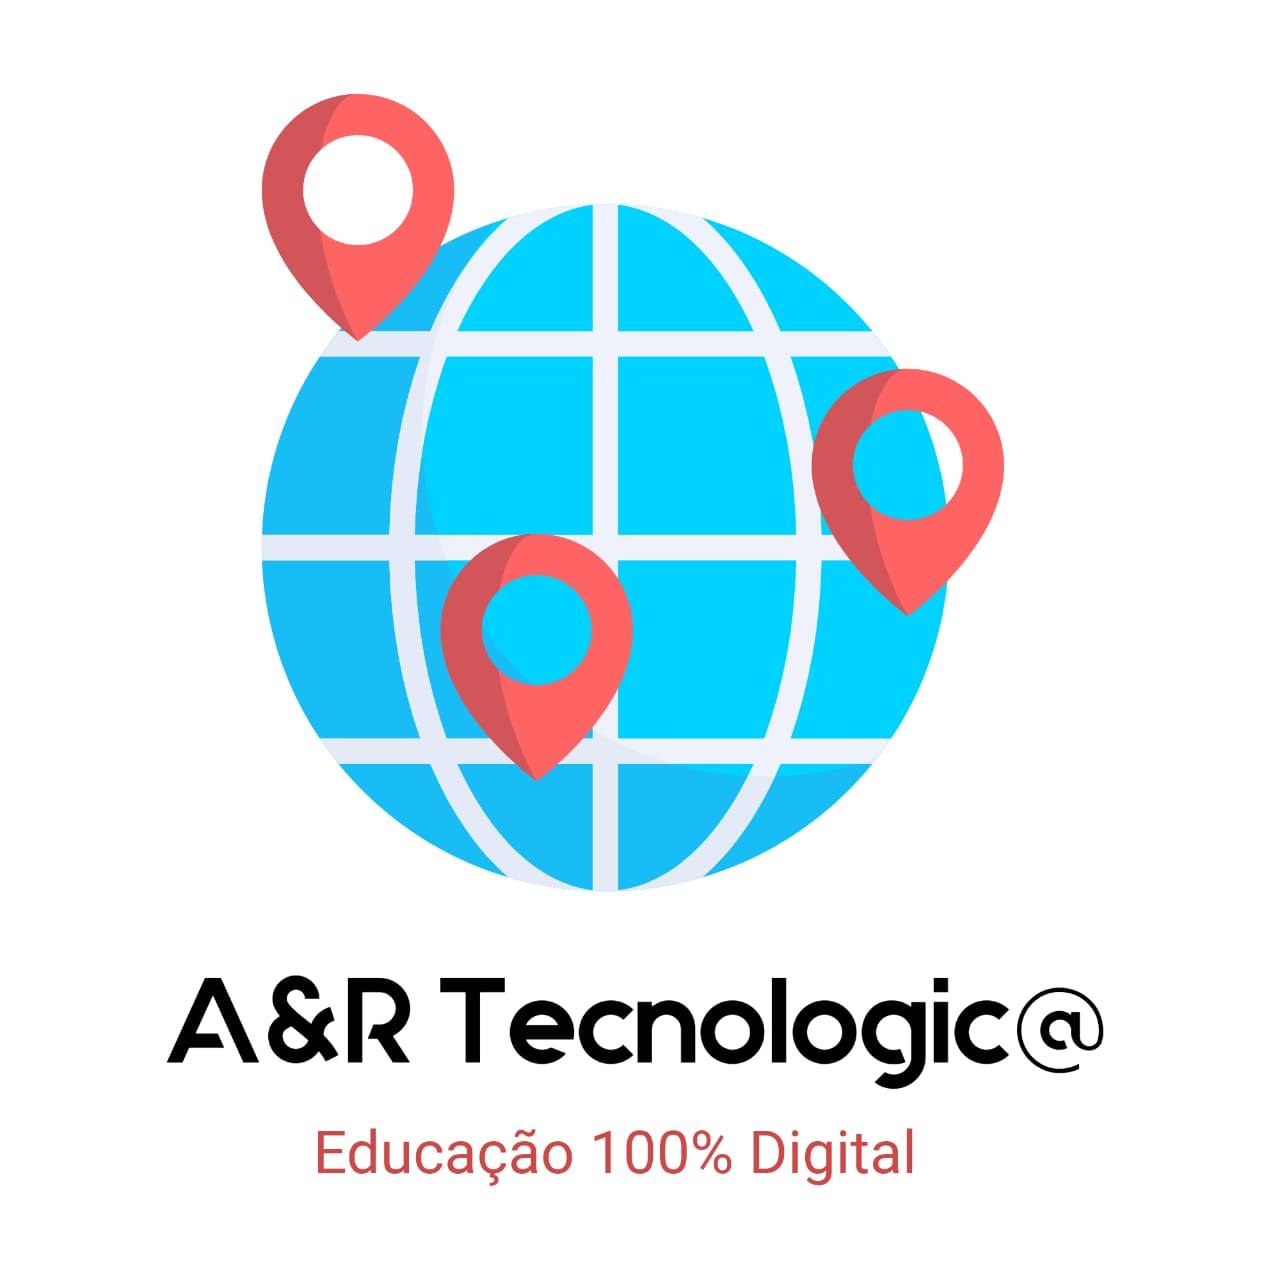 A&R Tecnológica